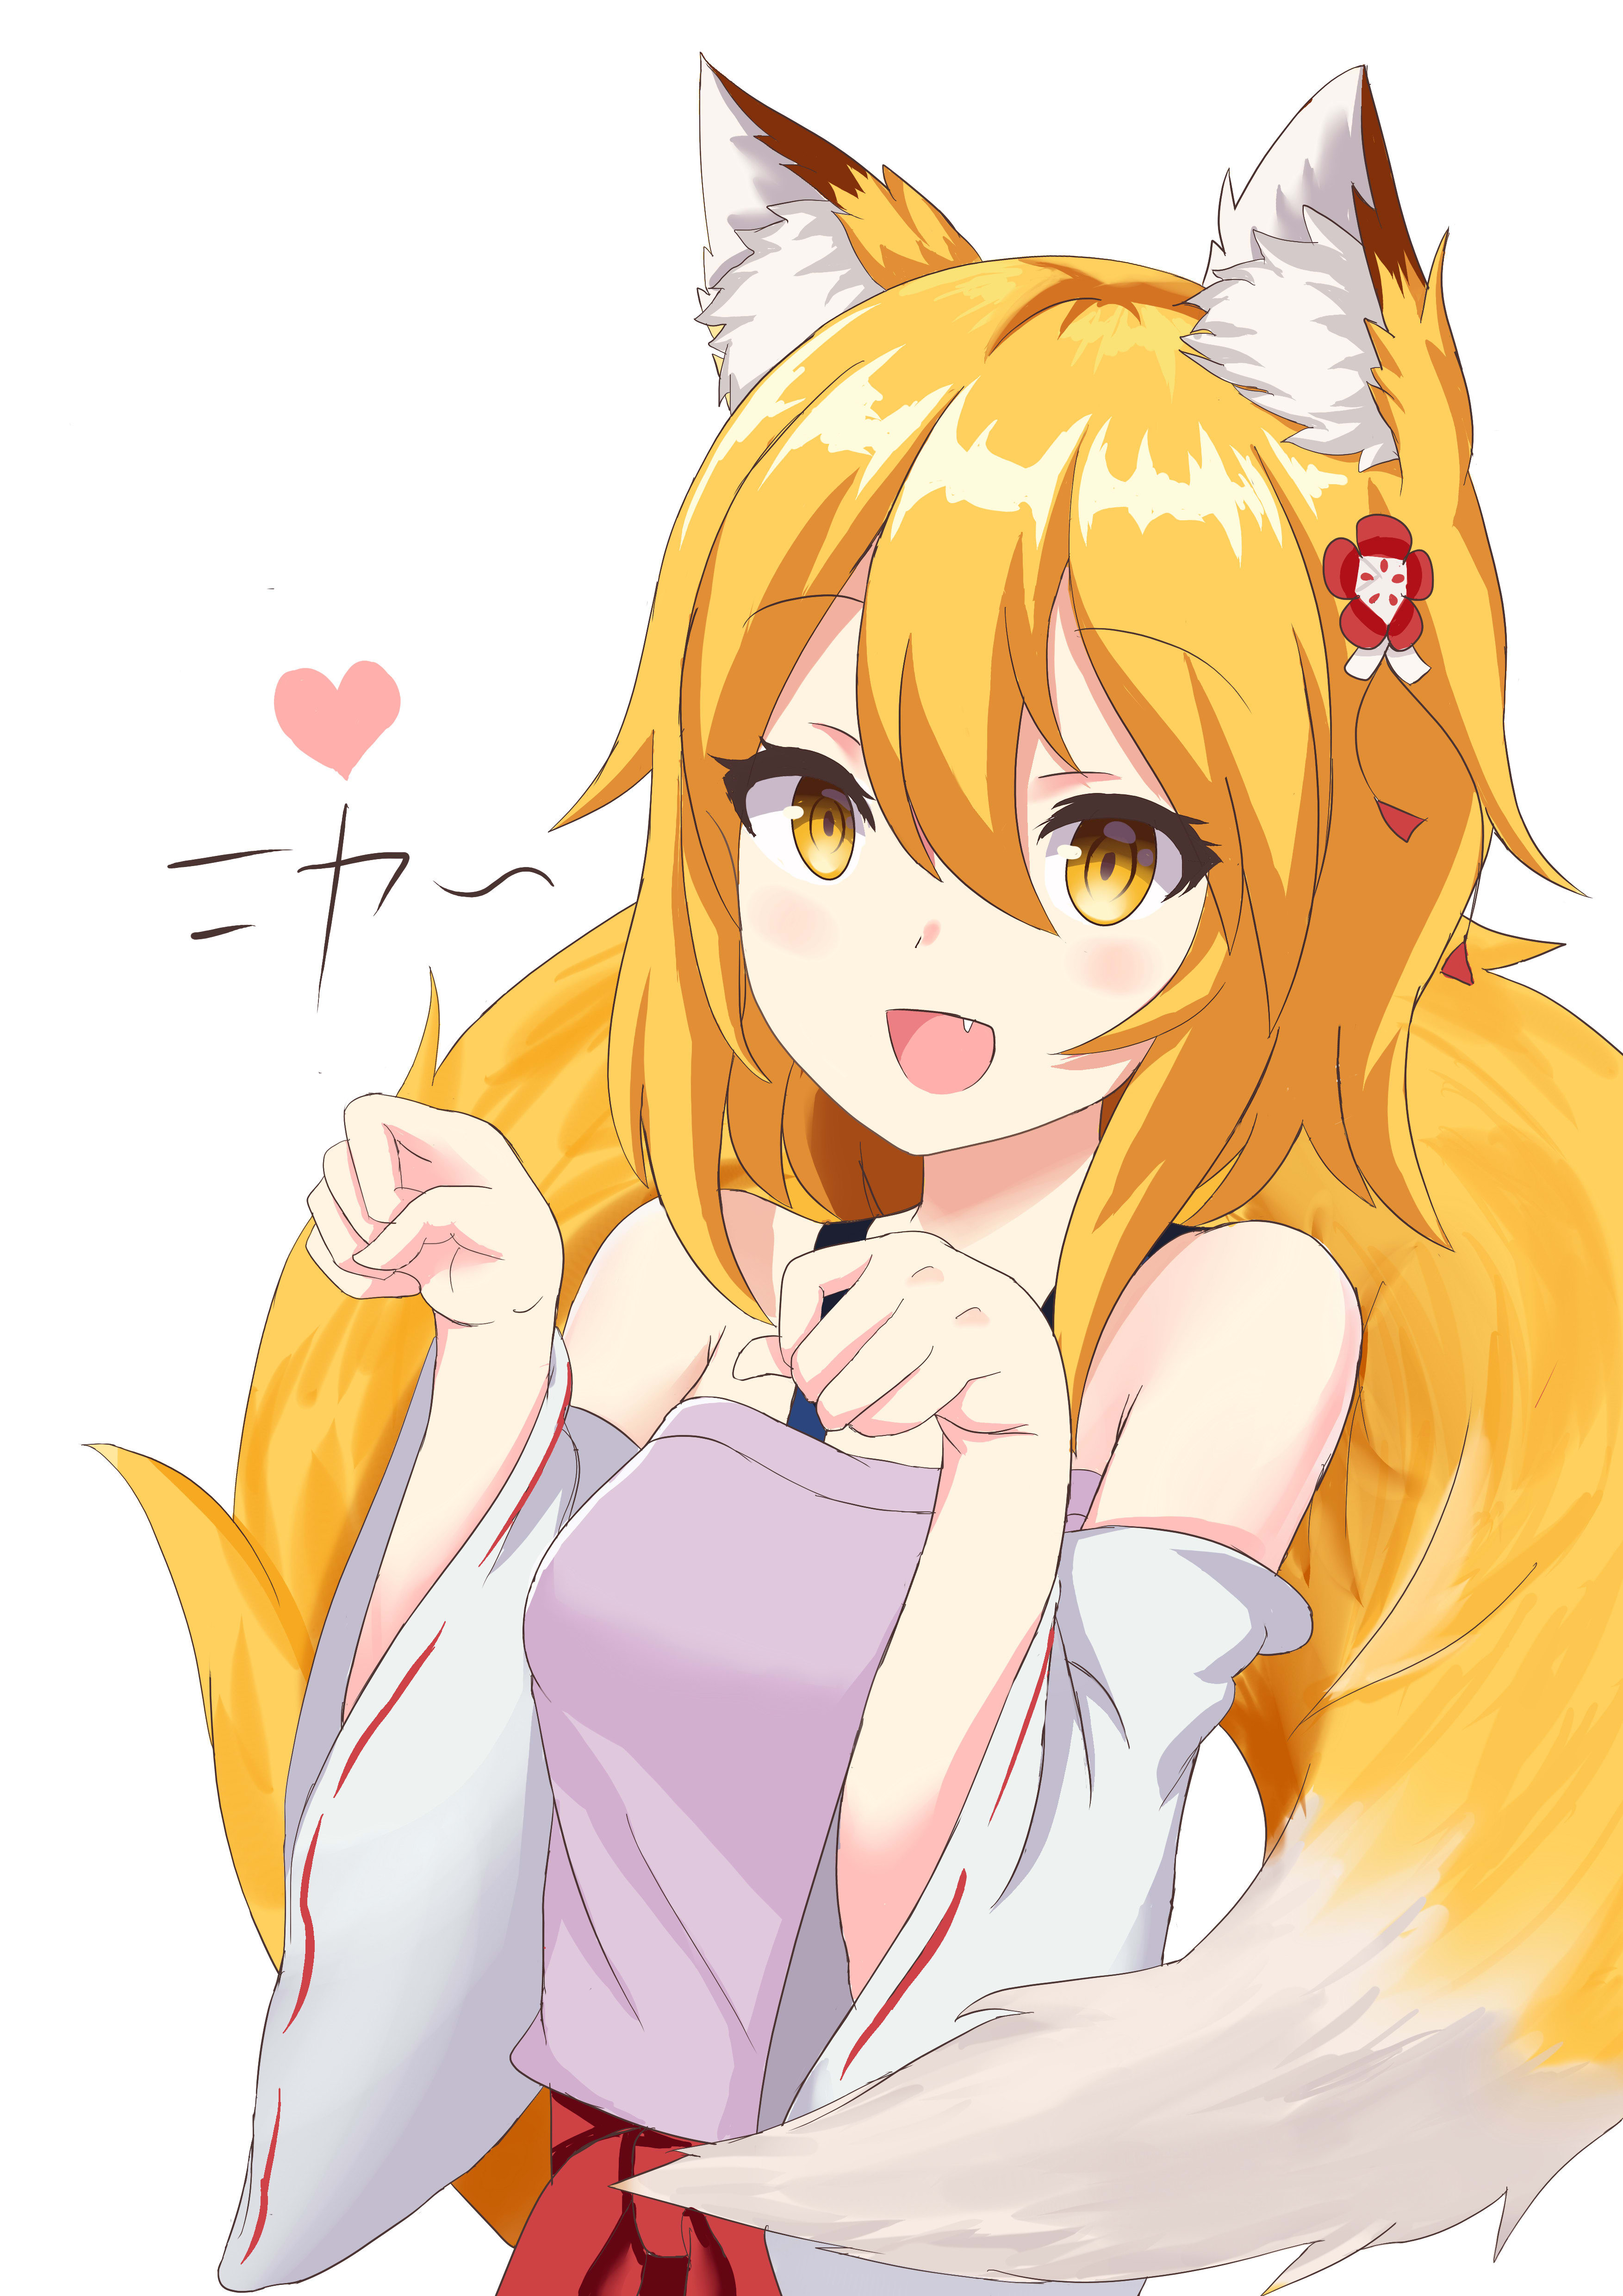 Chibi Cute Fox Maid by WabiSabiWonders on DeviantArt